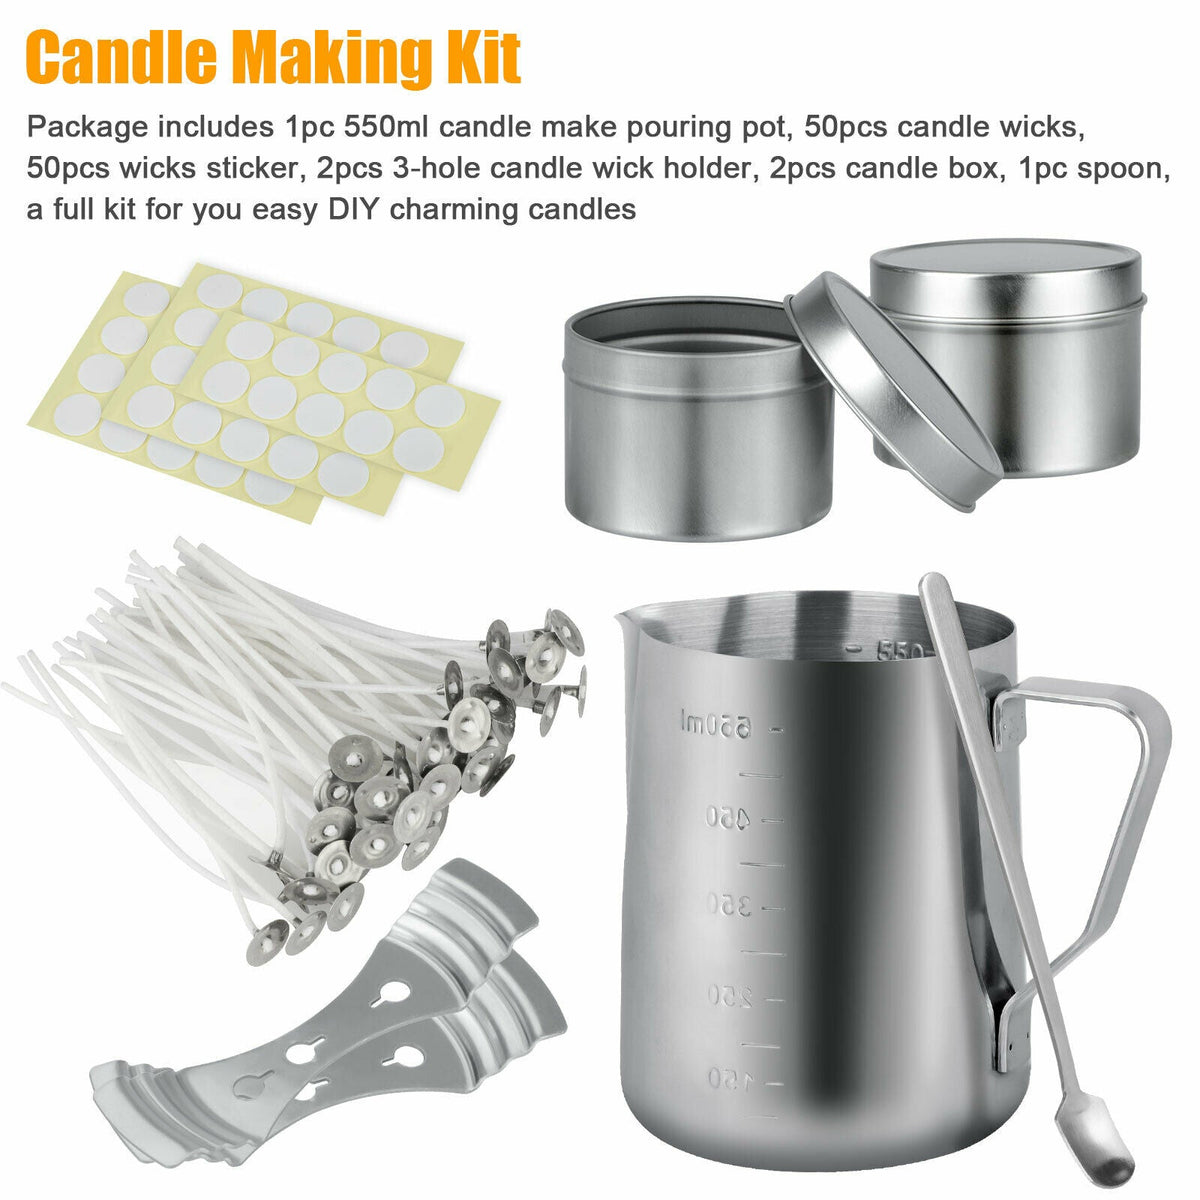 Candlewic Pouring Pot Kit 